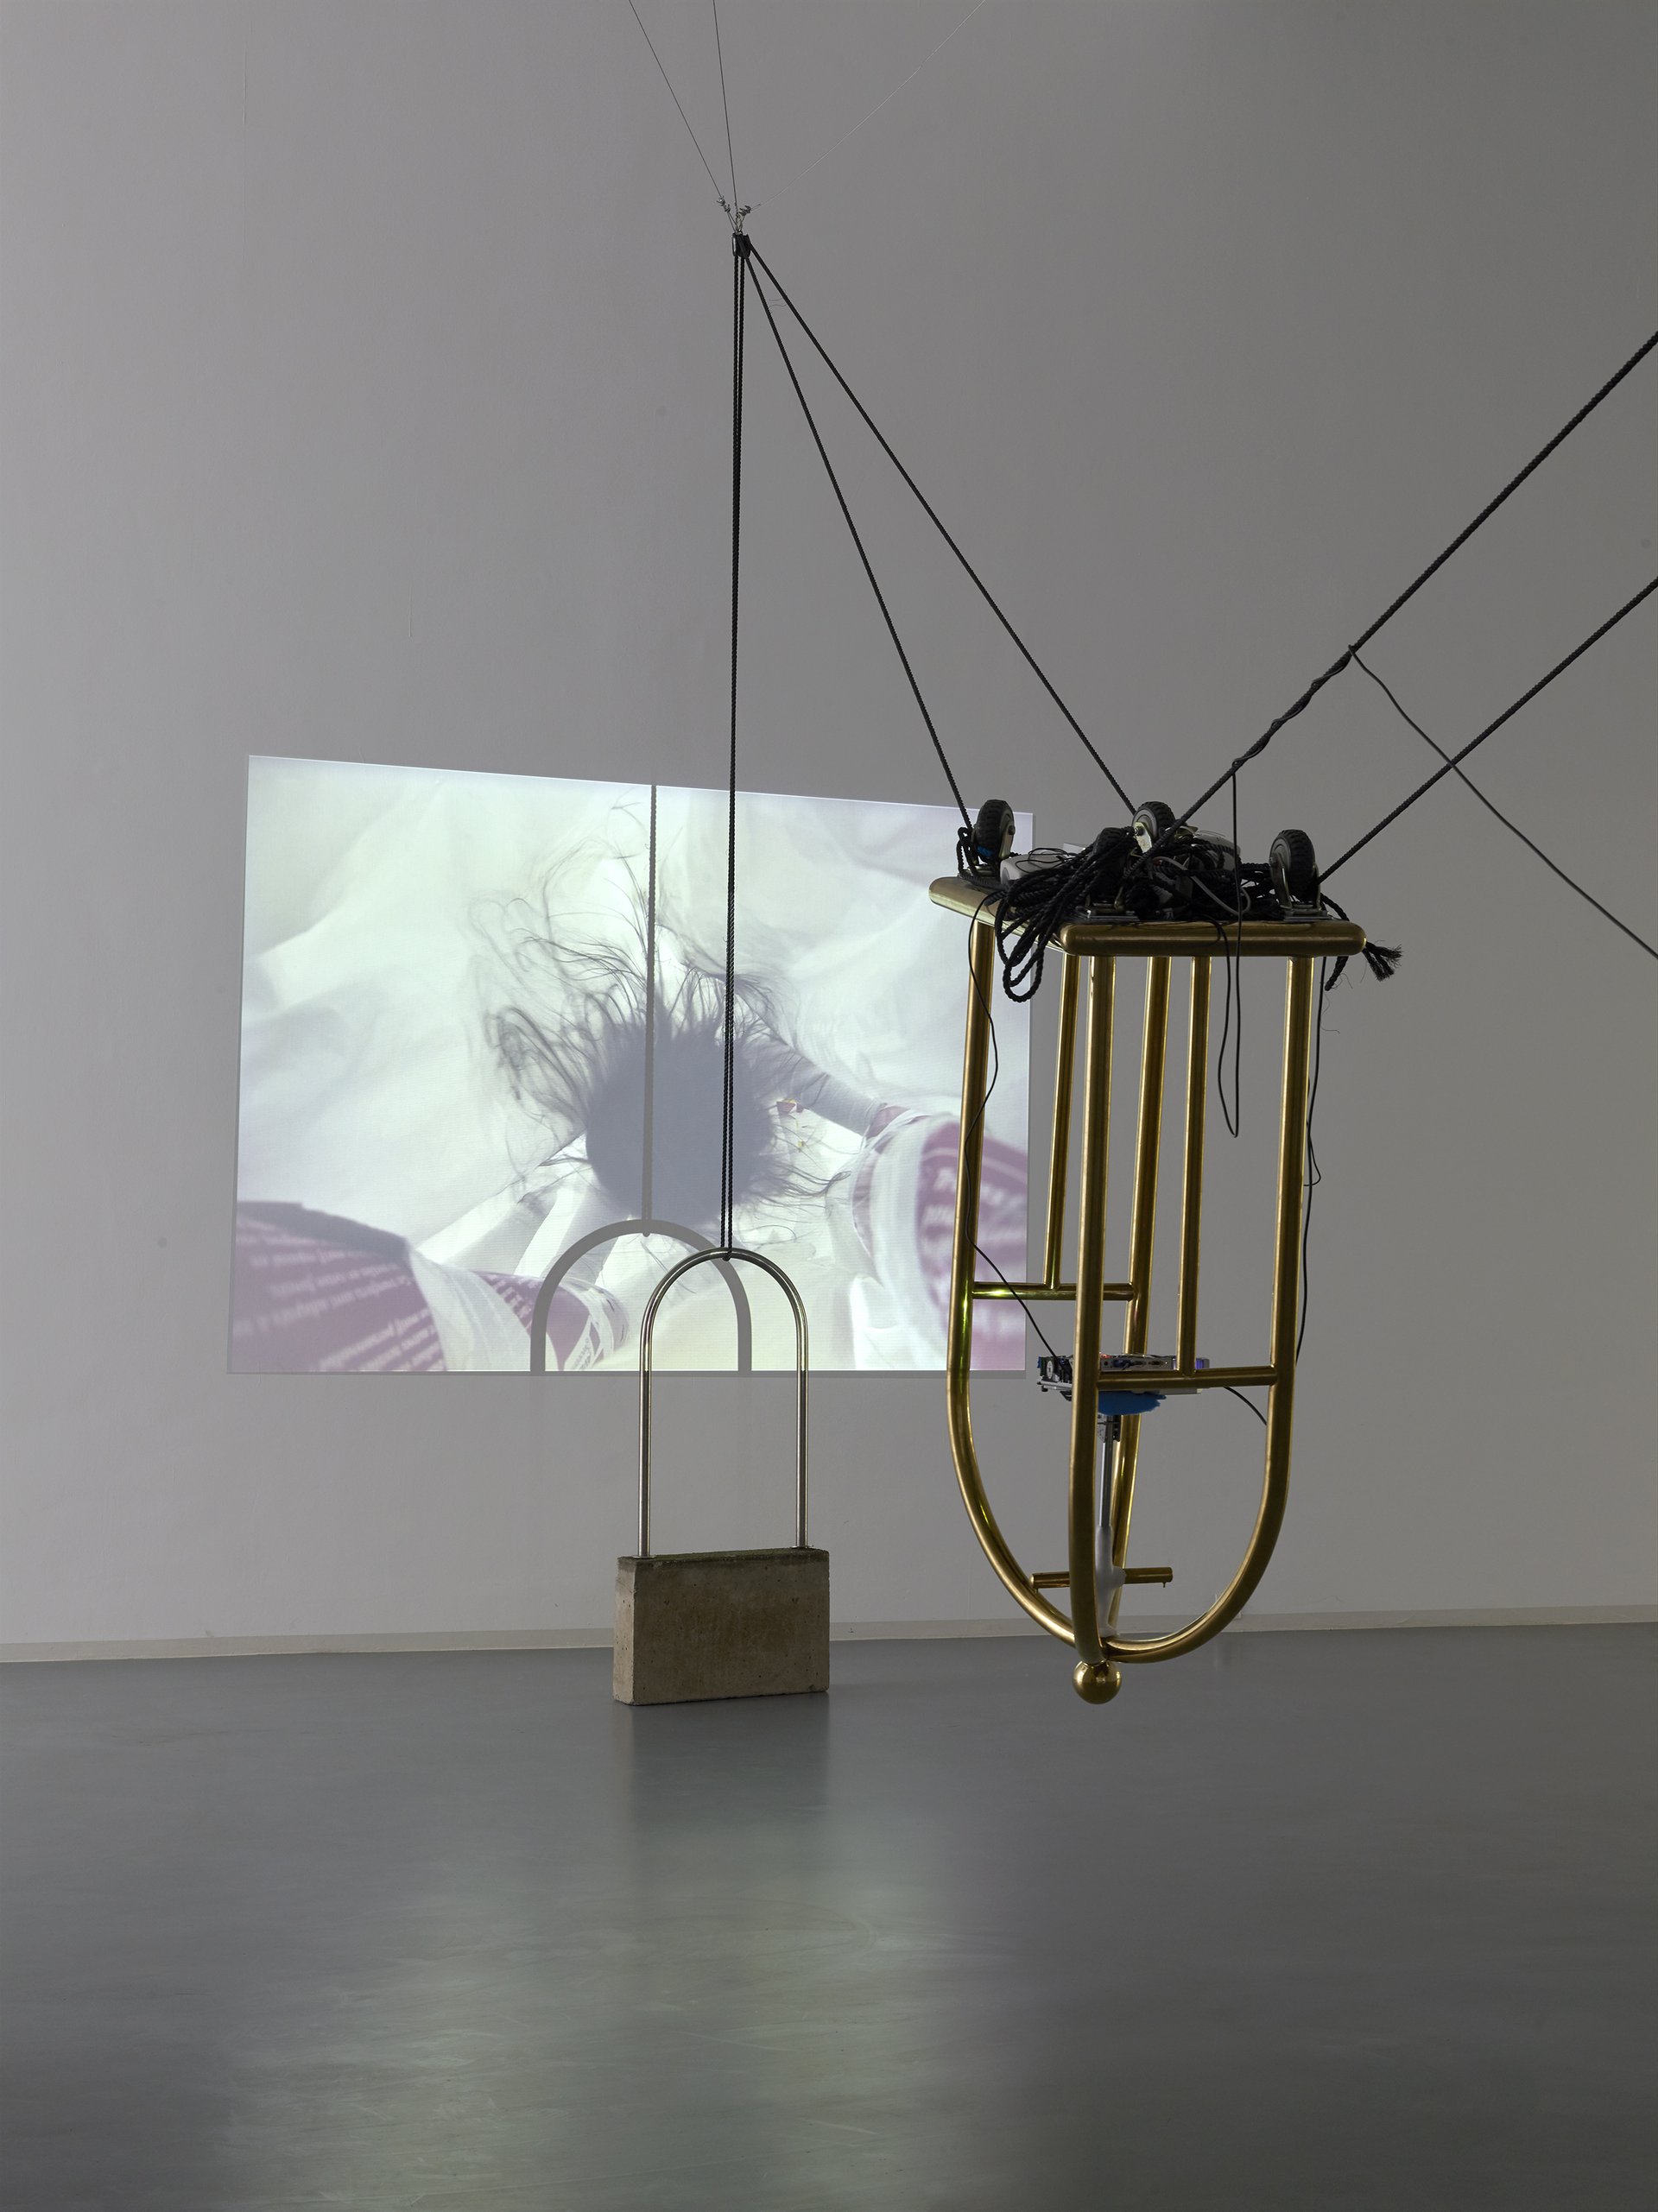 Raphaela Vogel, Raphaela und der große Kunstverein, installation view, 2015, Bonner Kunstverein. Courtesy the artist and BQ, Berlin. Photo: Simon Vogel